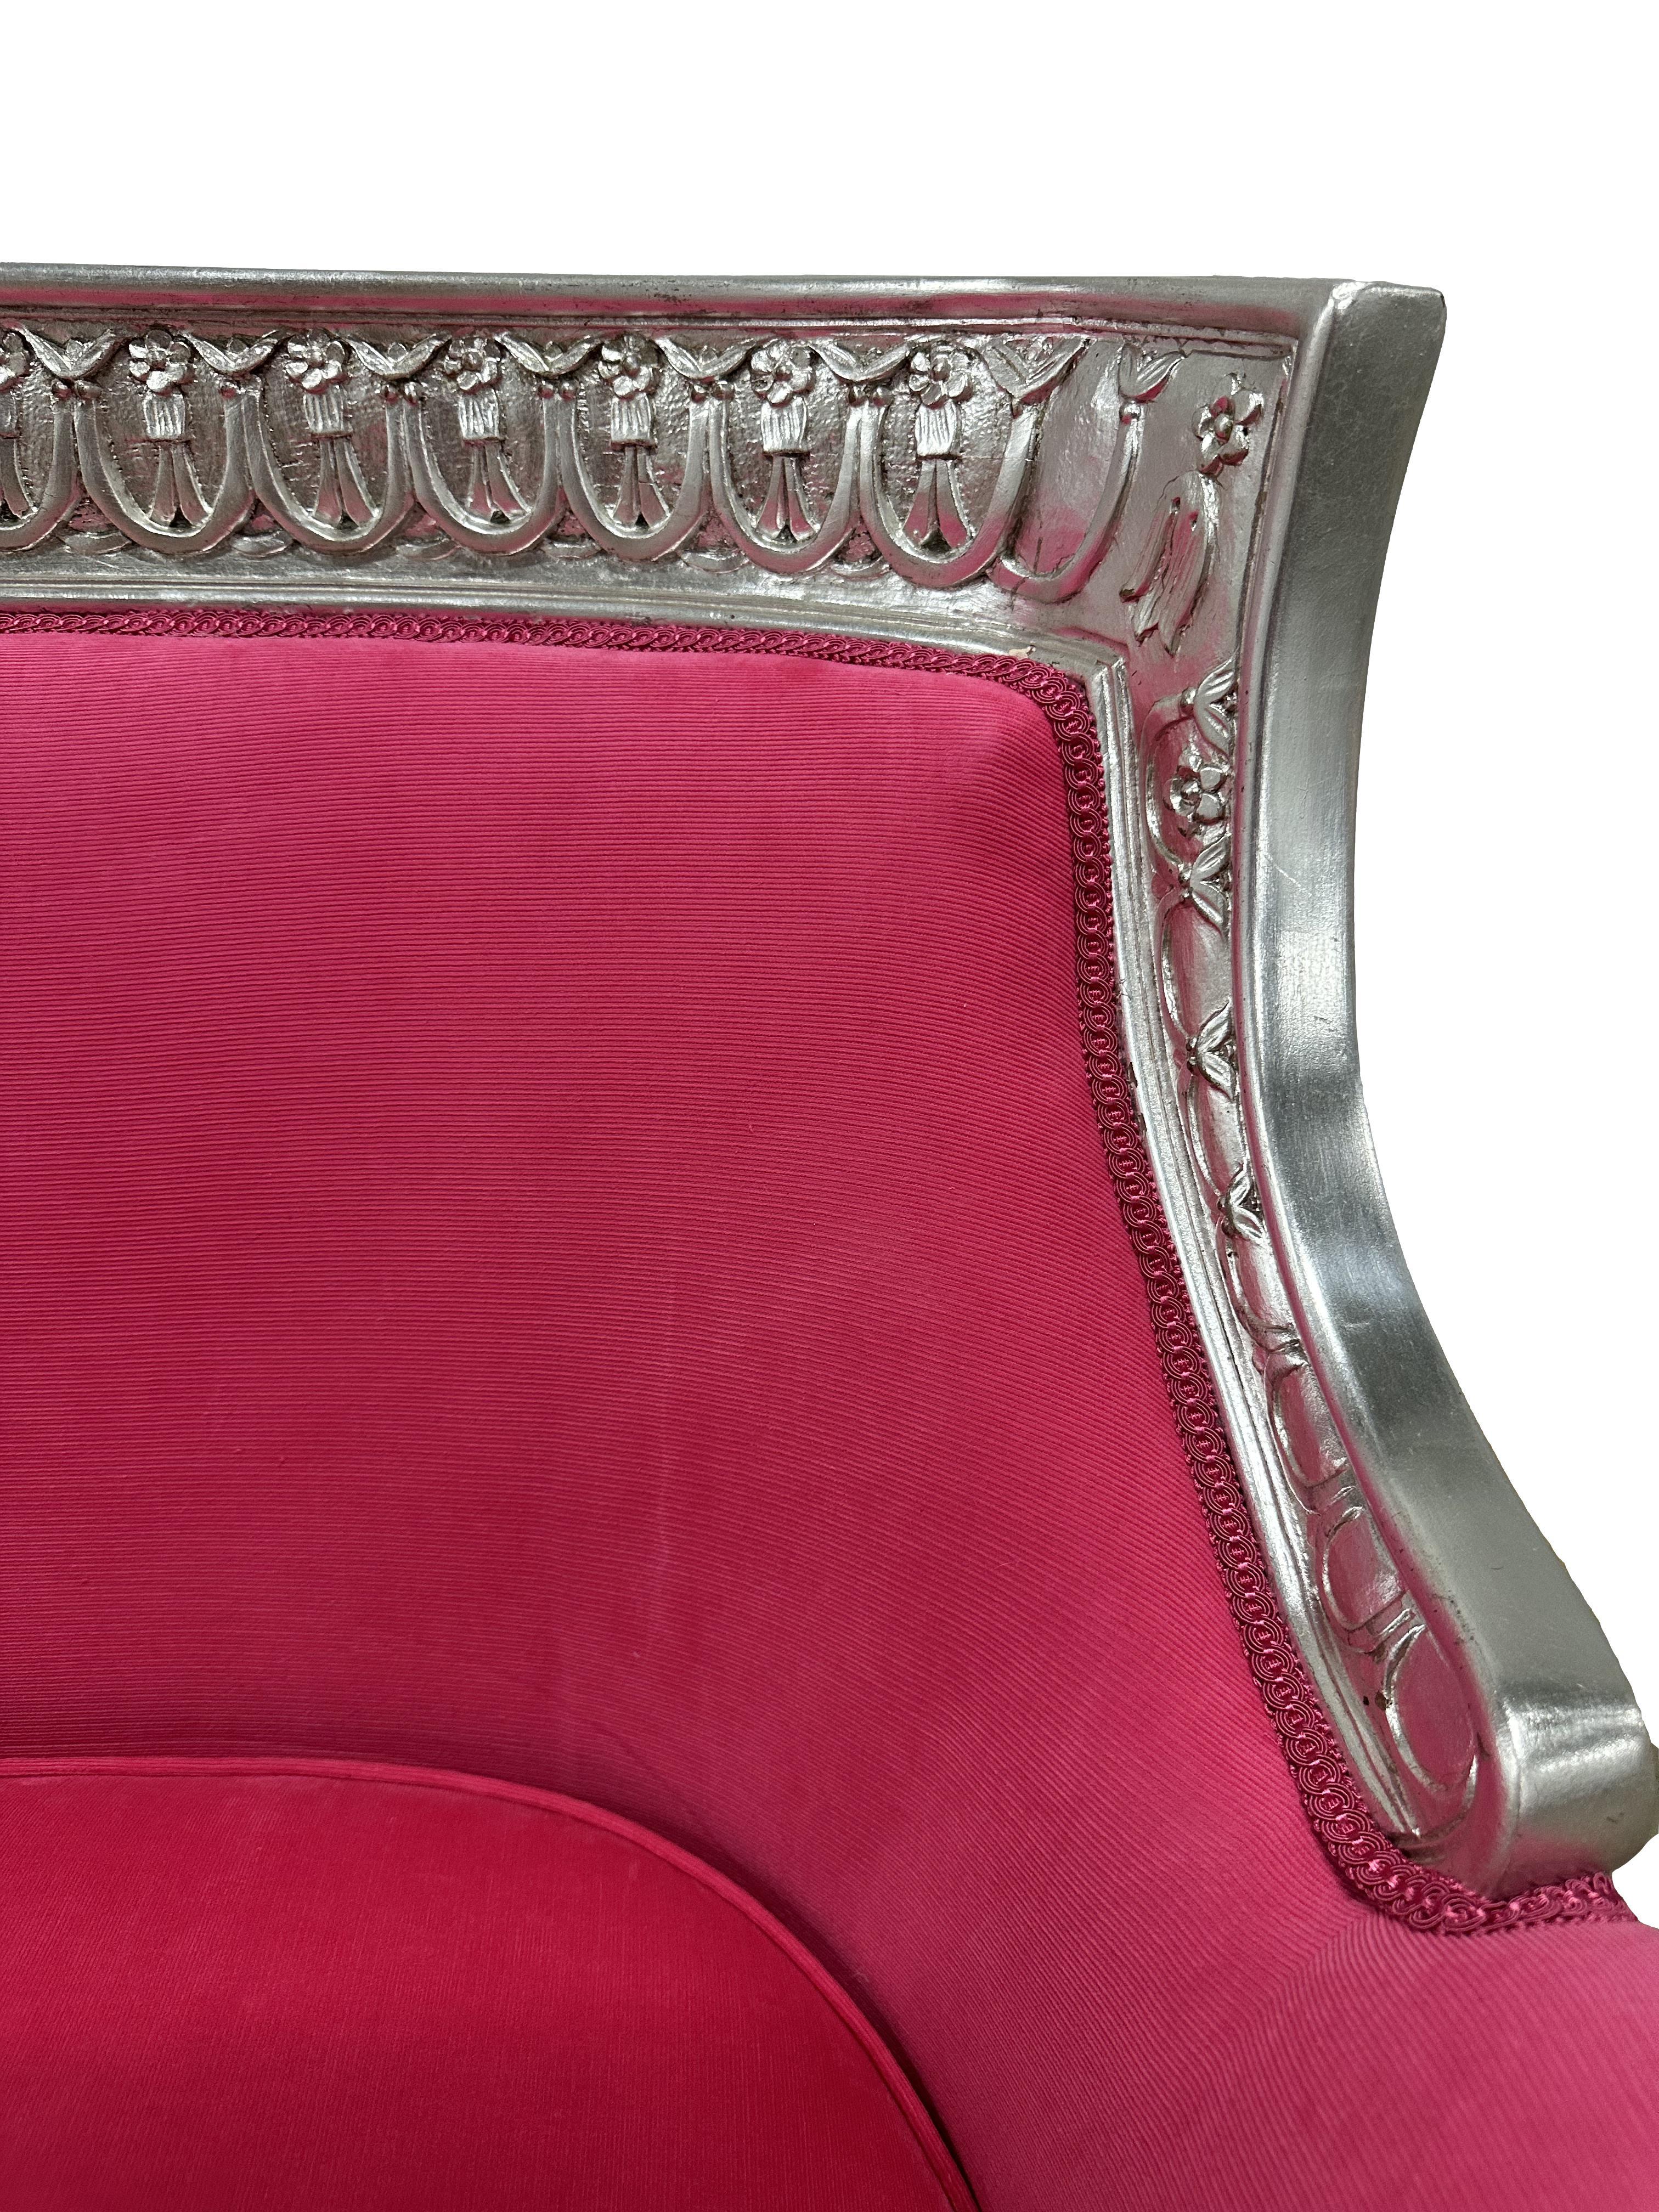 hot pink sofa chair